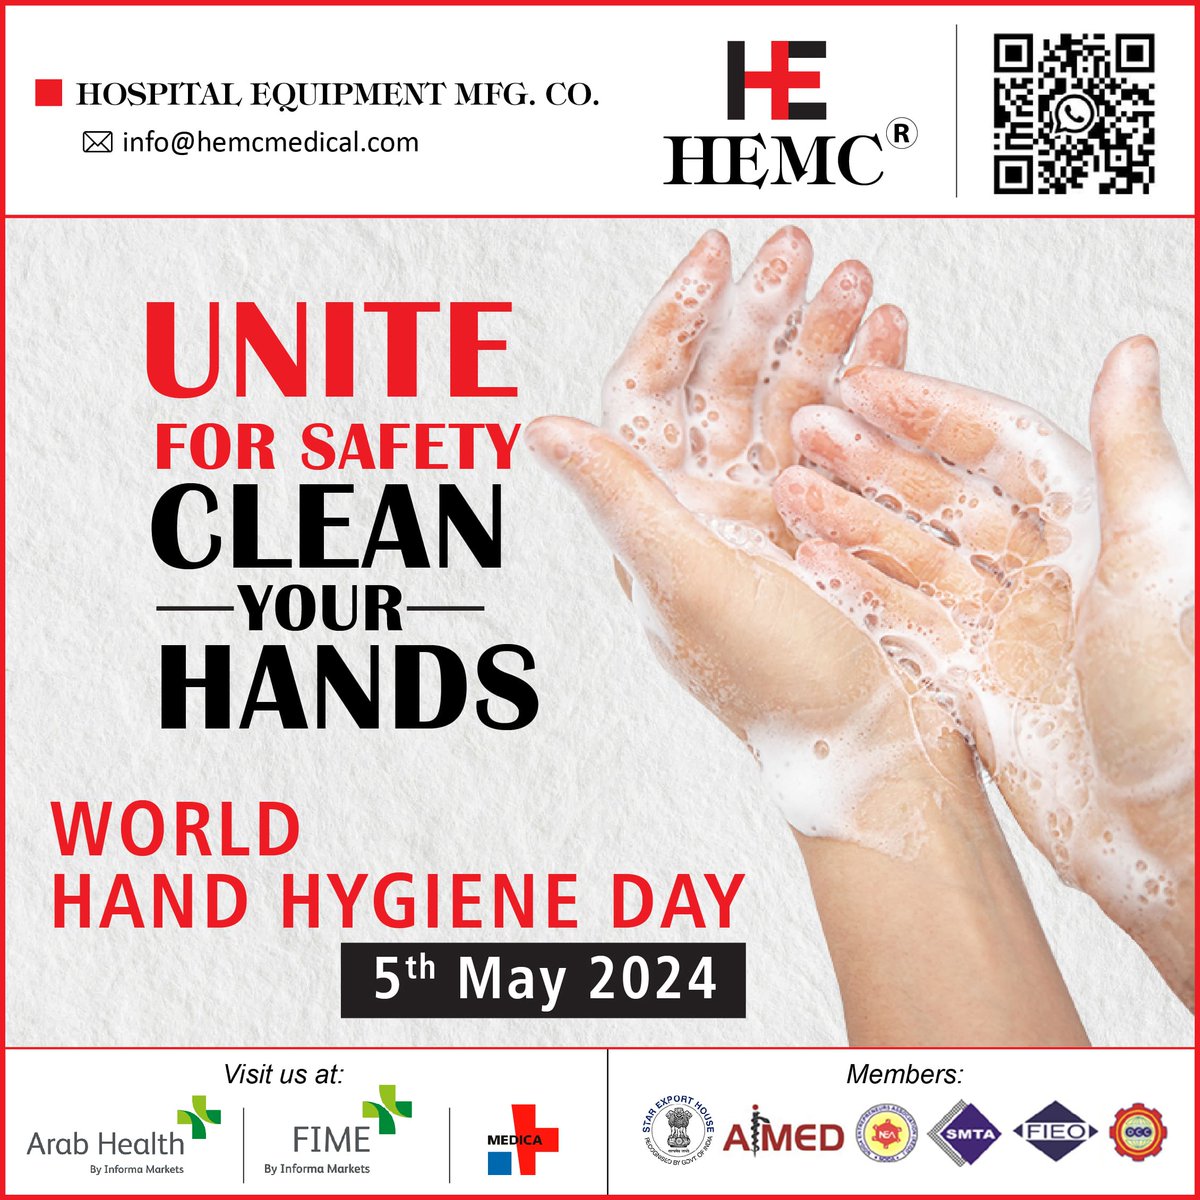 Good Health Begins with Clean Hands. Happy World Hand Hygiene Day! #handhygiene #handhygieneday #StayHealthy #handwash #CleanHandsSaveLives #CleanHands #hemcmedical #hemcindia